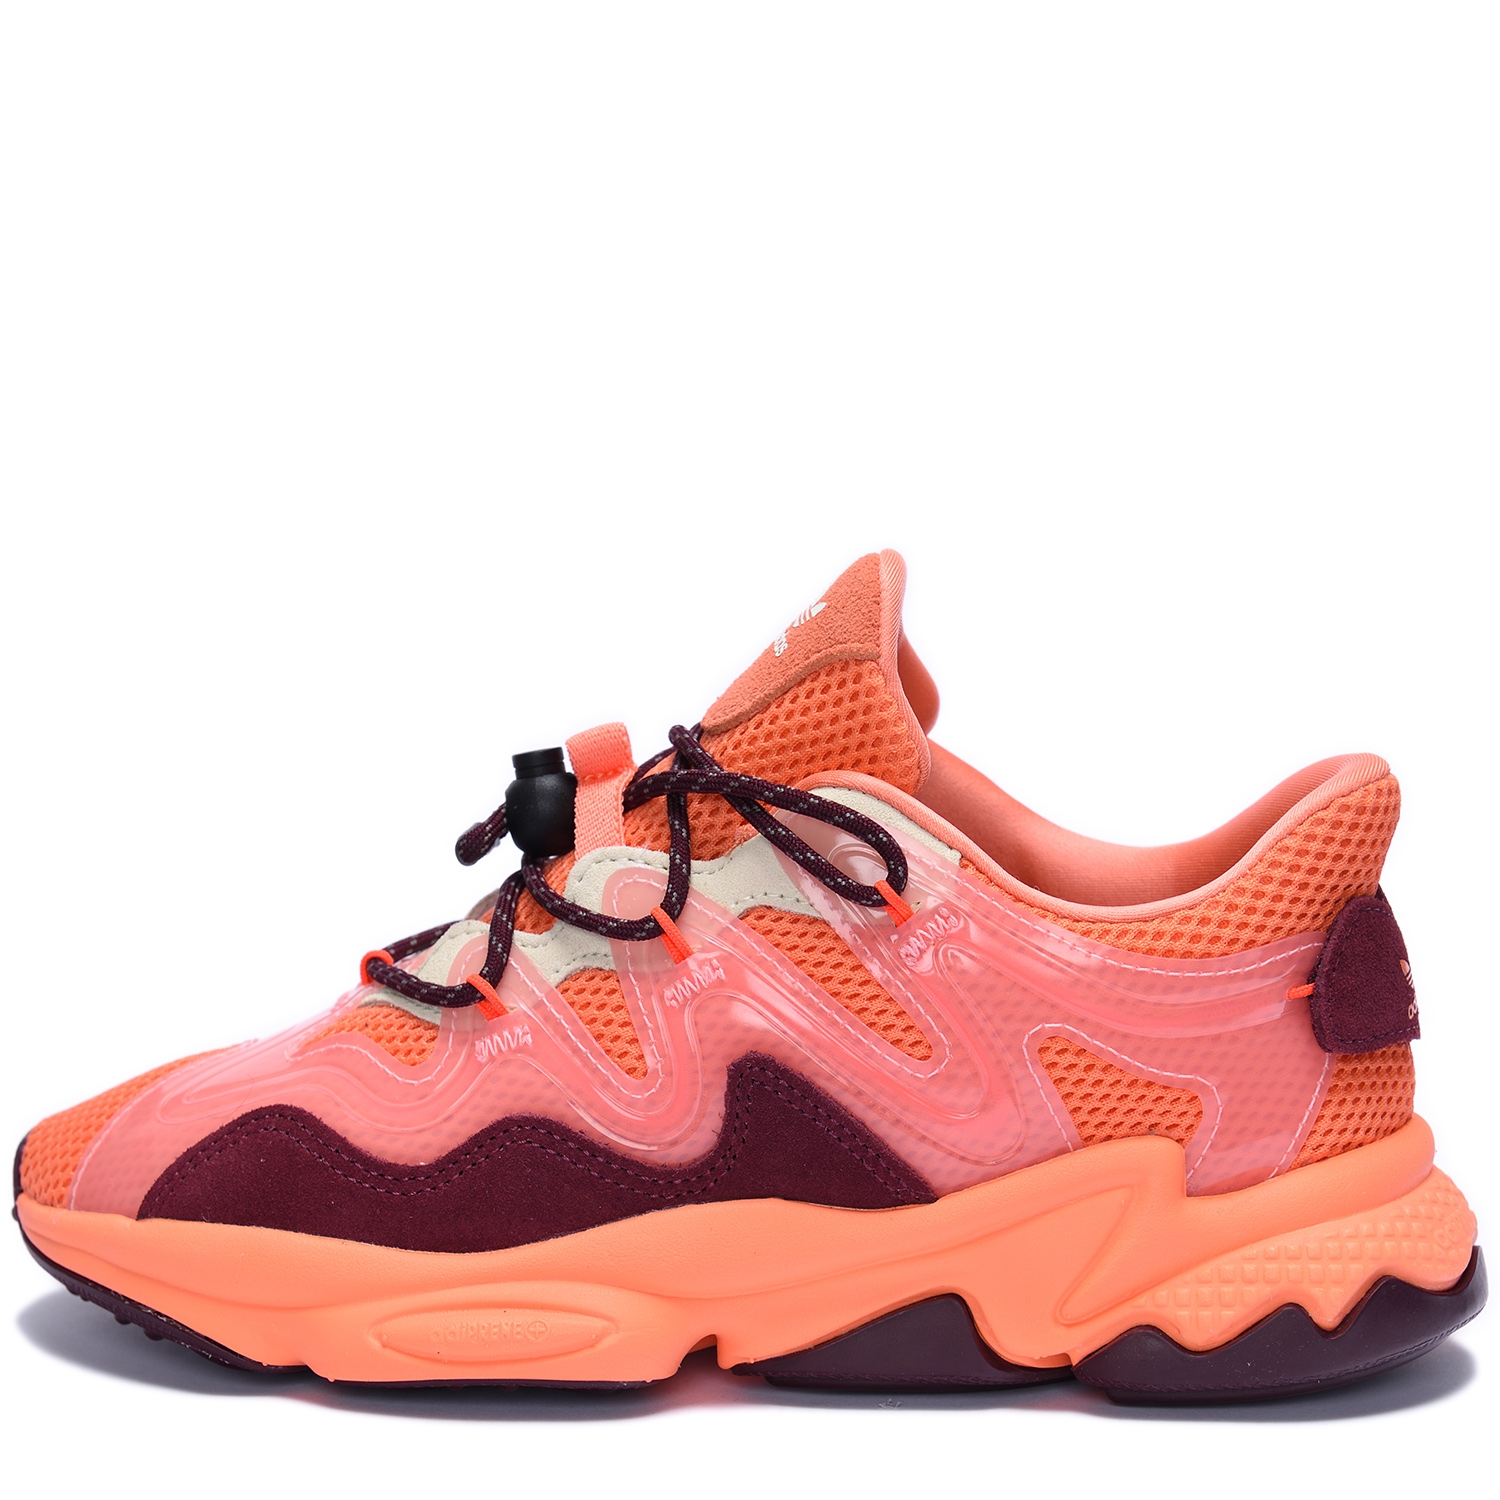 adidas Originals OZWEEGO PLUS Semi Coral / Maroon / Glow Pink